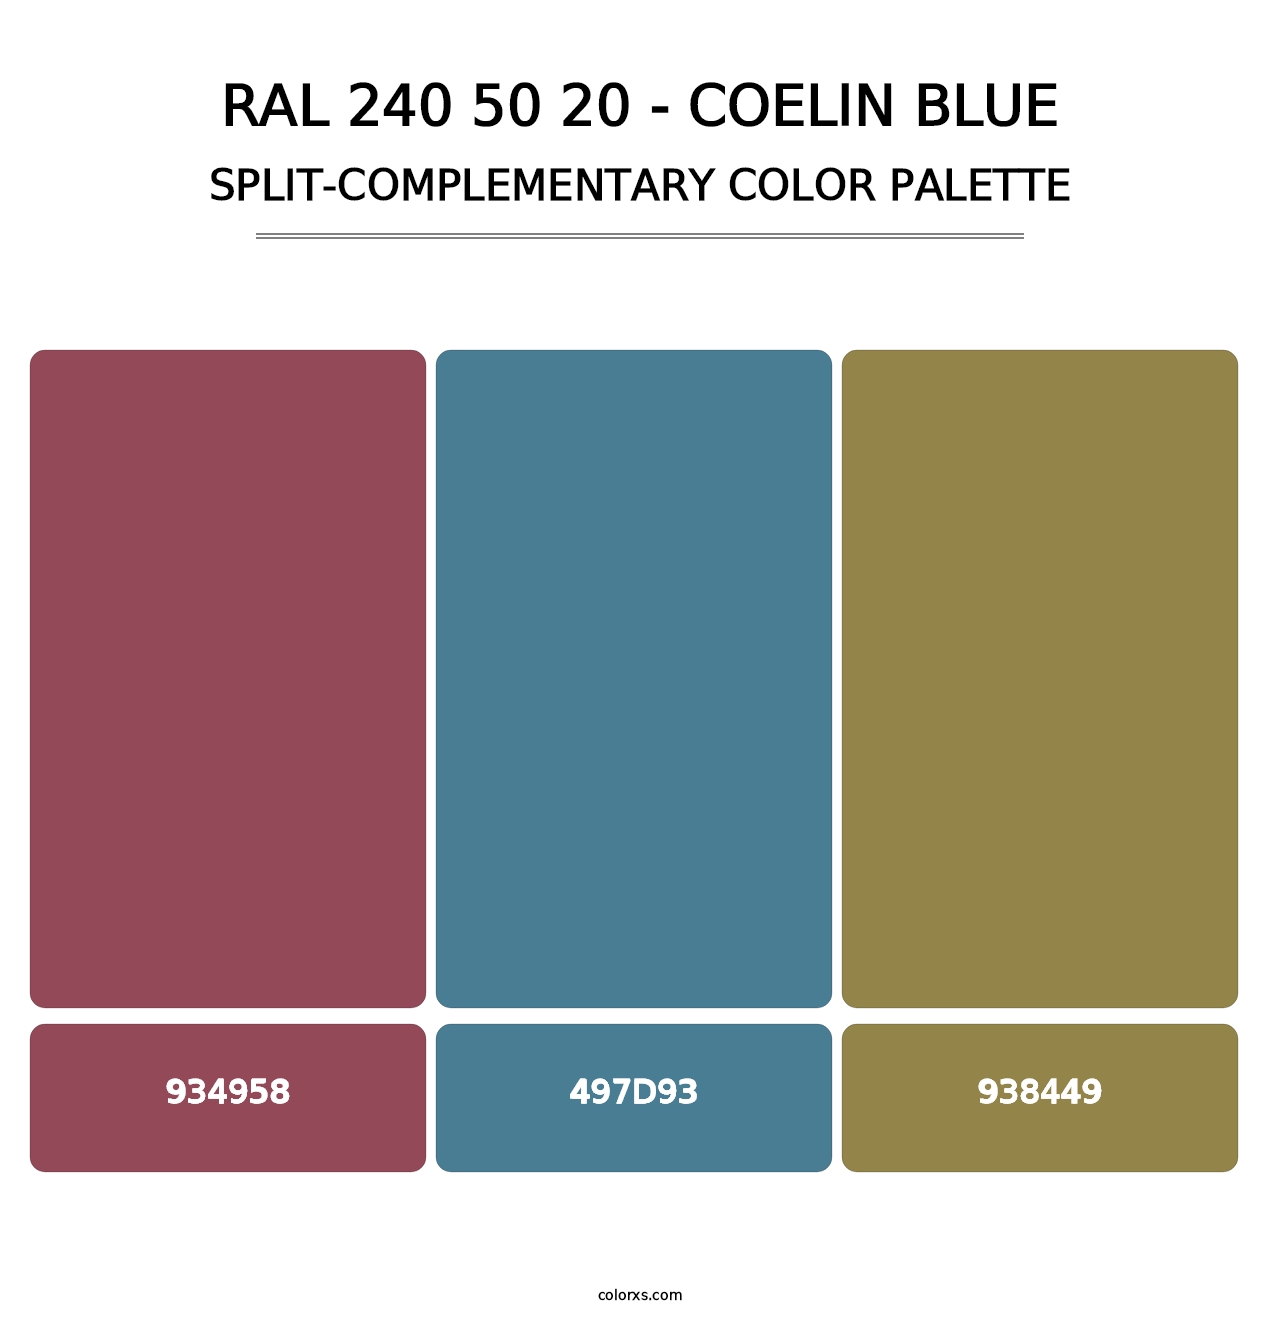 RAL 240 50 20 - Coelin Blue - Split-Complementary Color Palette